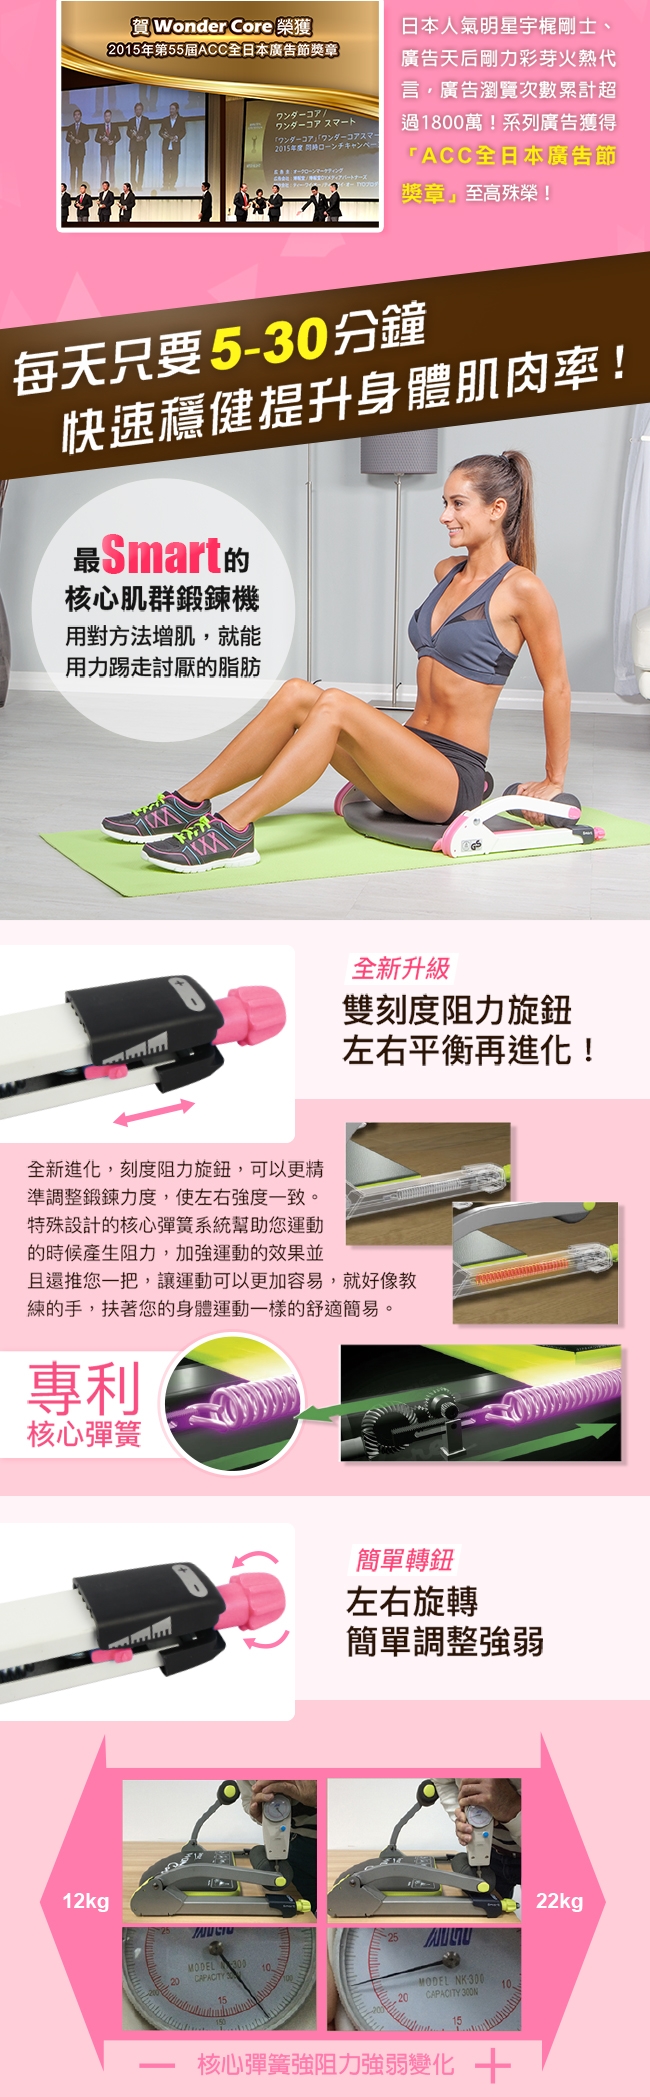 Wonder Core Smart 全能輕巧健身機「愛戀粉」三件組(含拉力繩+扭腰盤-粉)